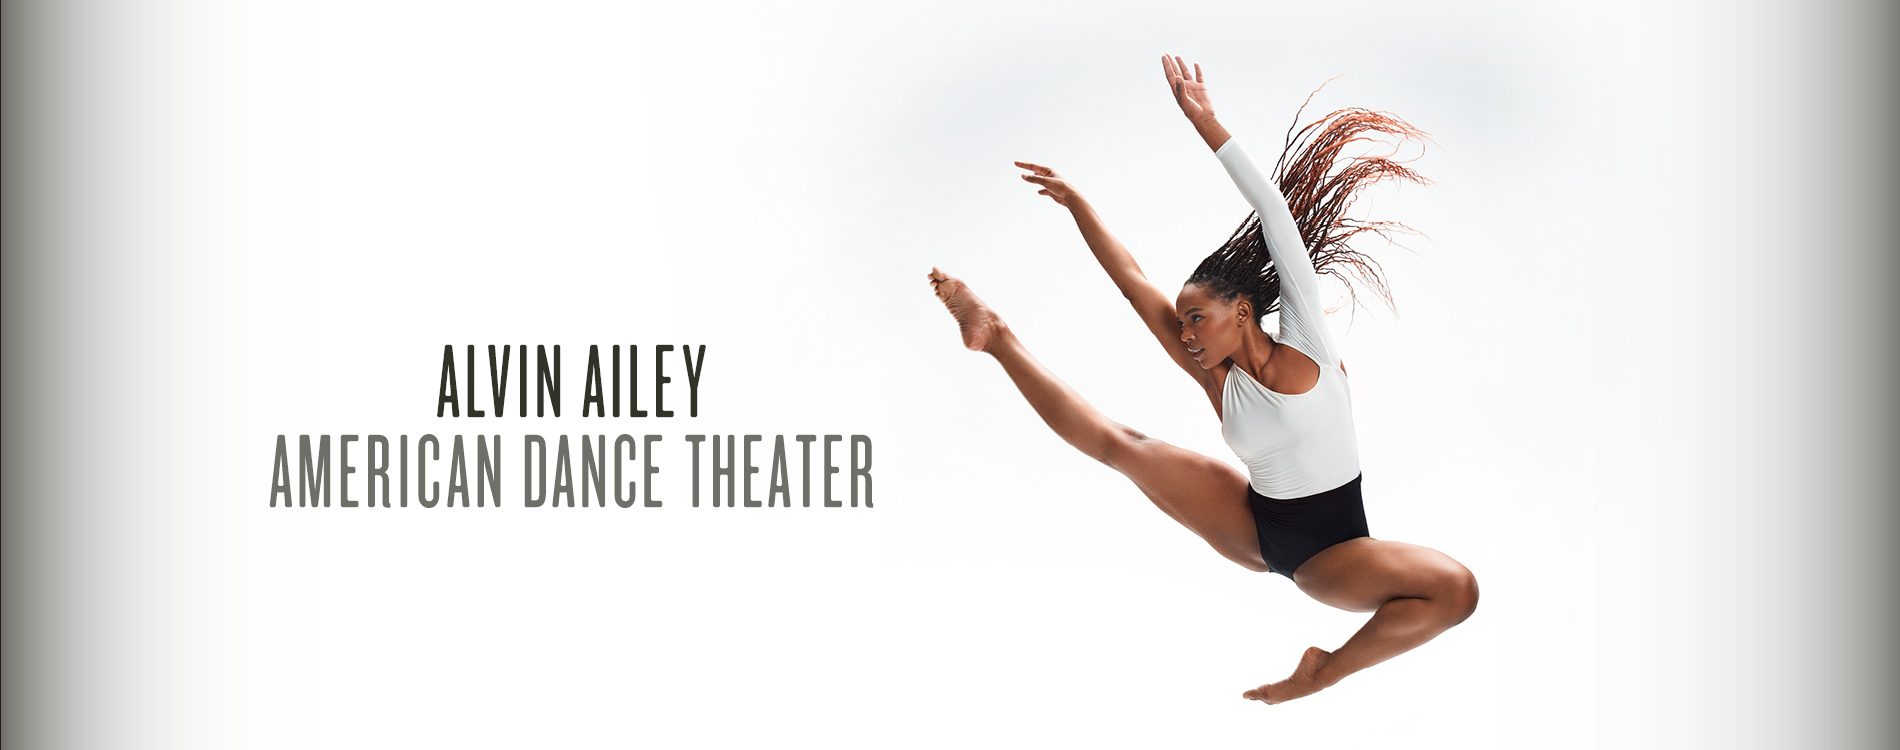 Alvin Ailey American Dance Theater 4-16